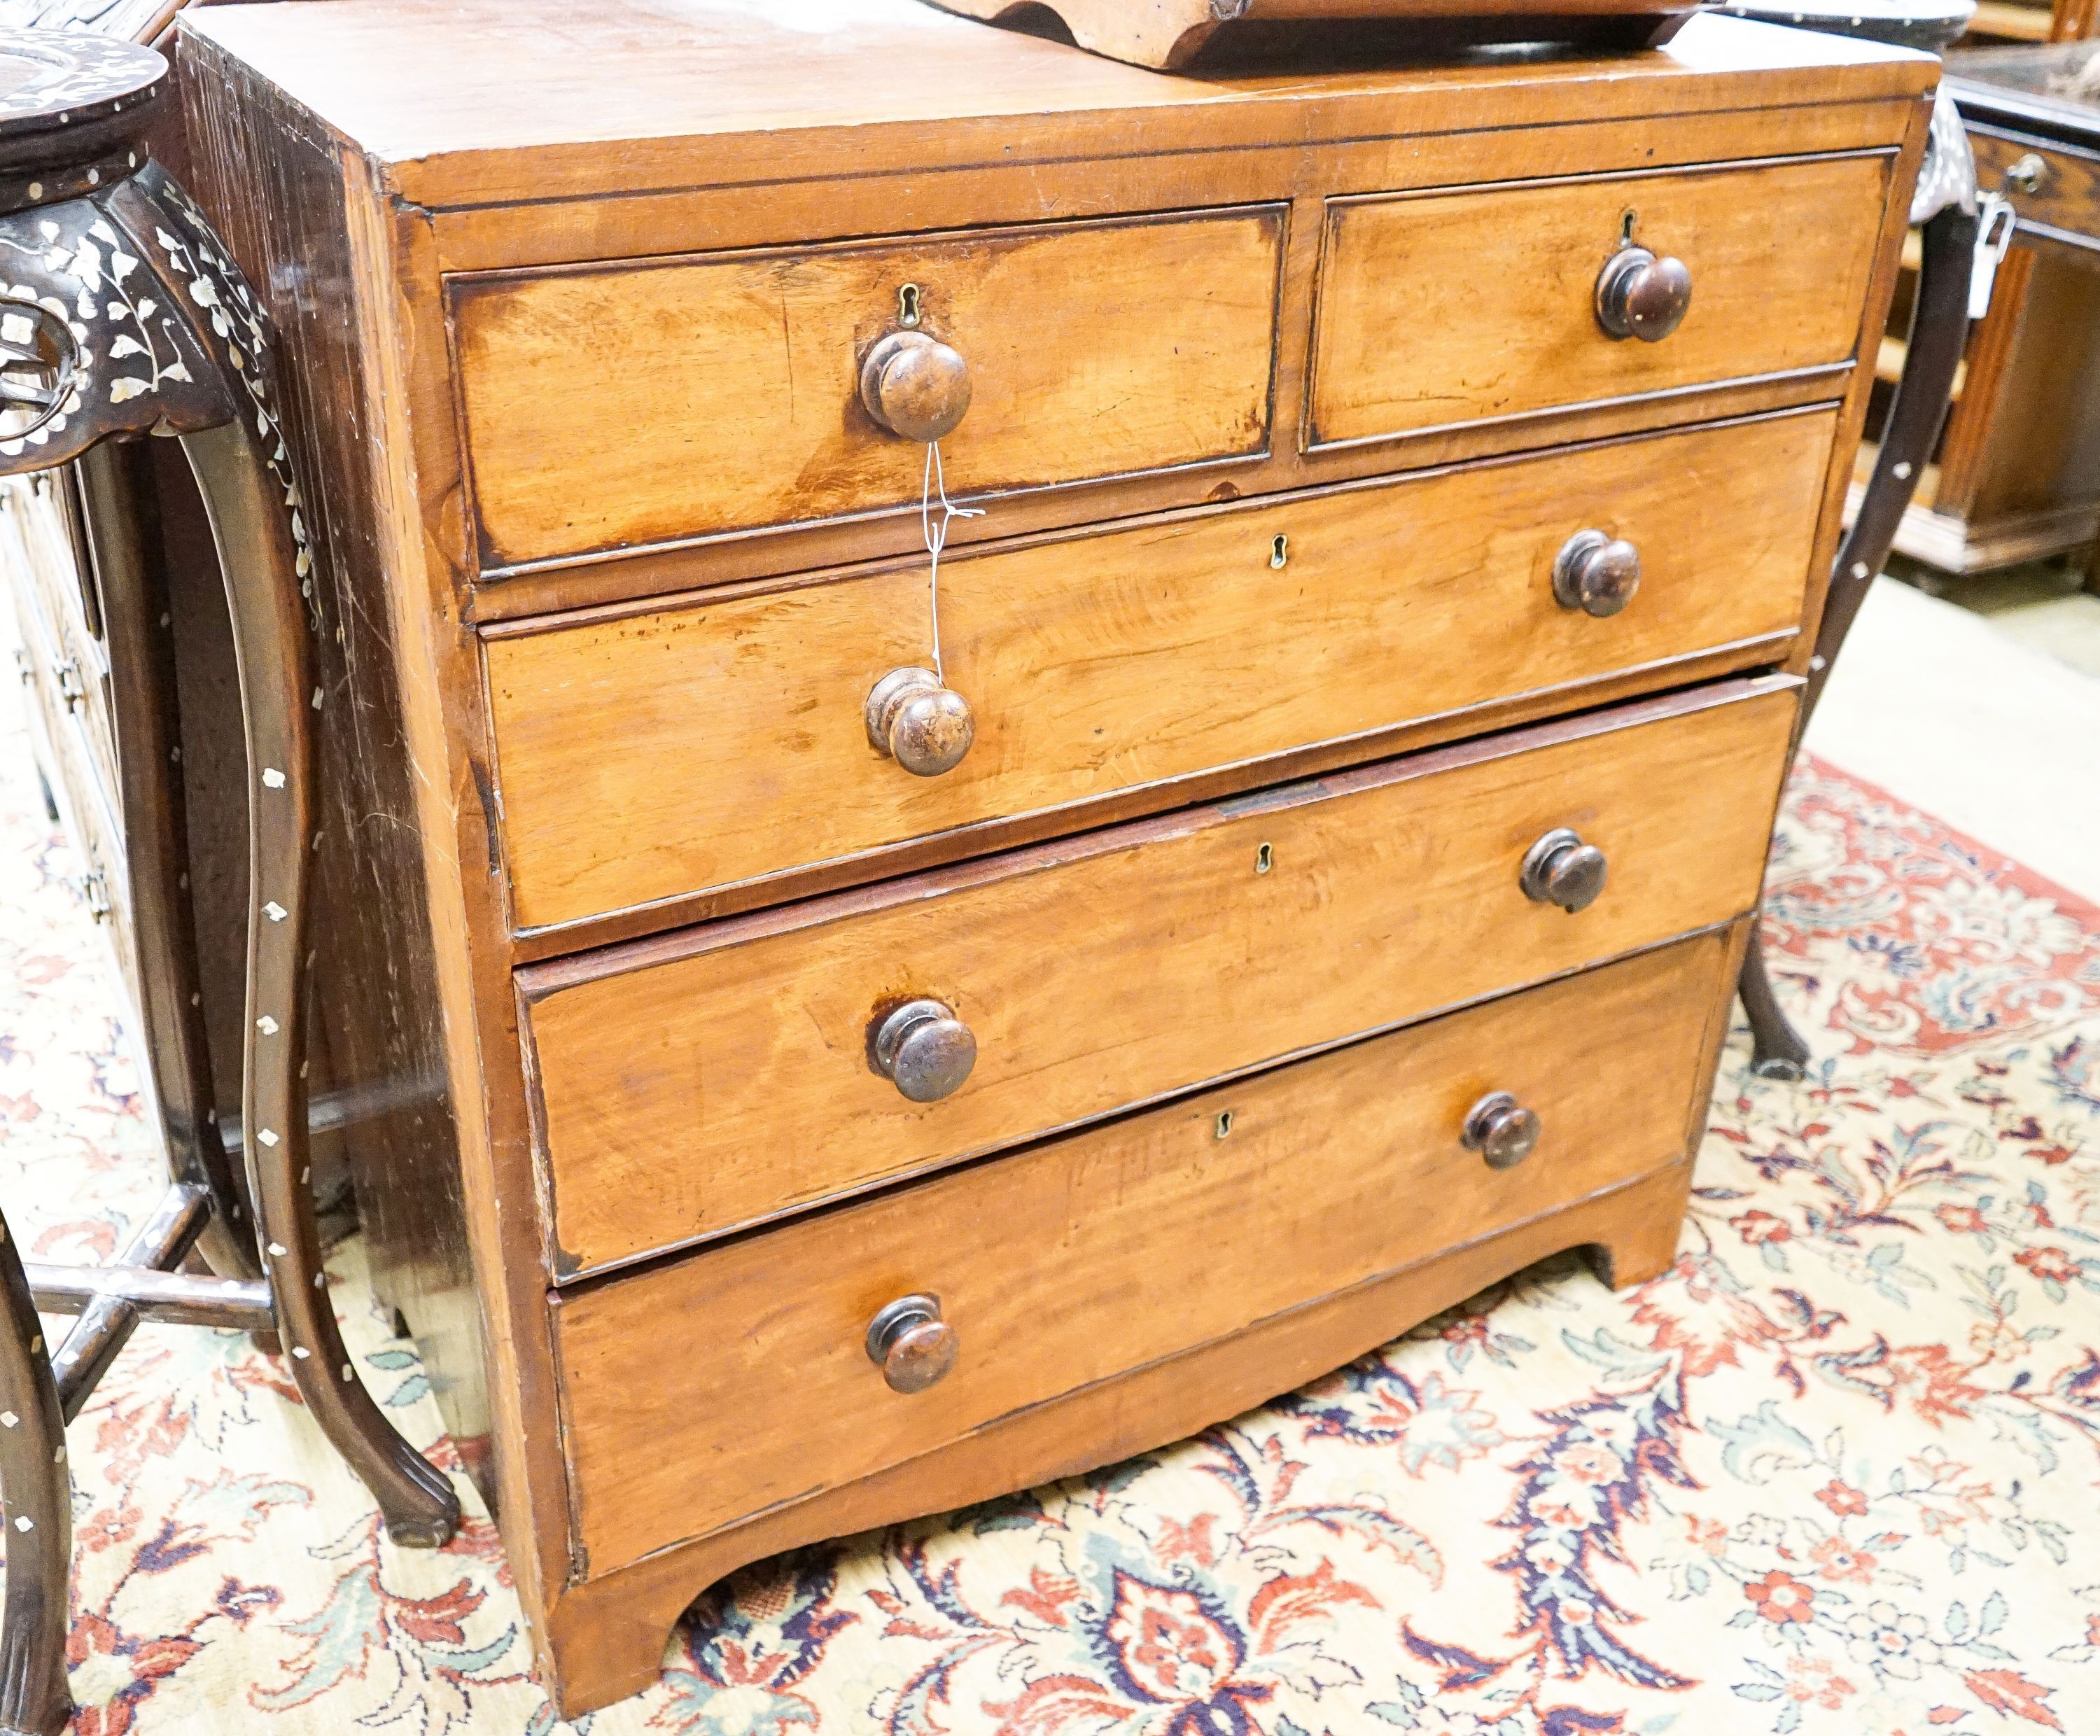 A small George IV mahogany chest, width 91cm, depth 45cm, height 93cm